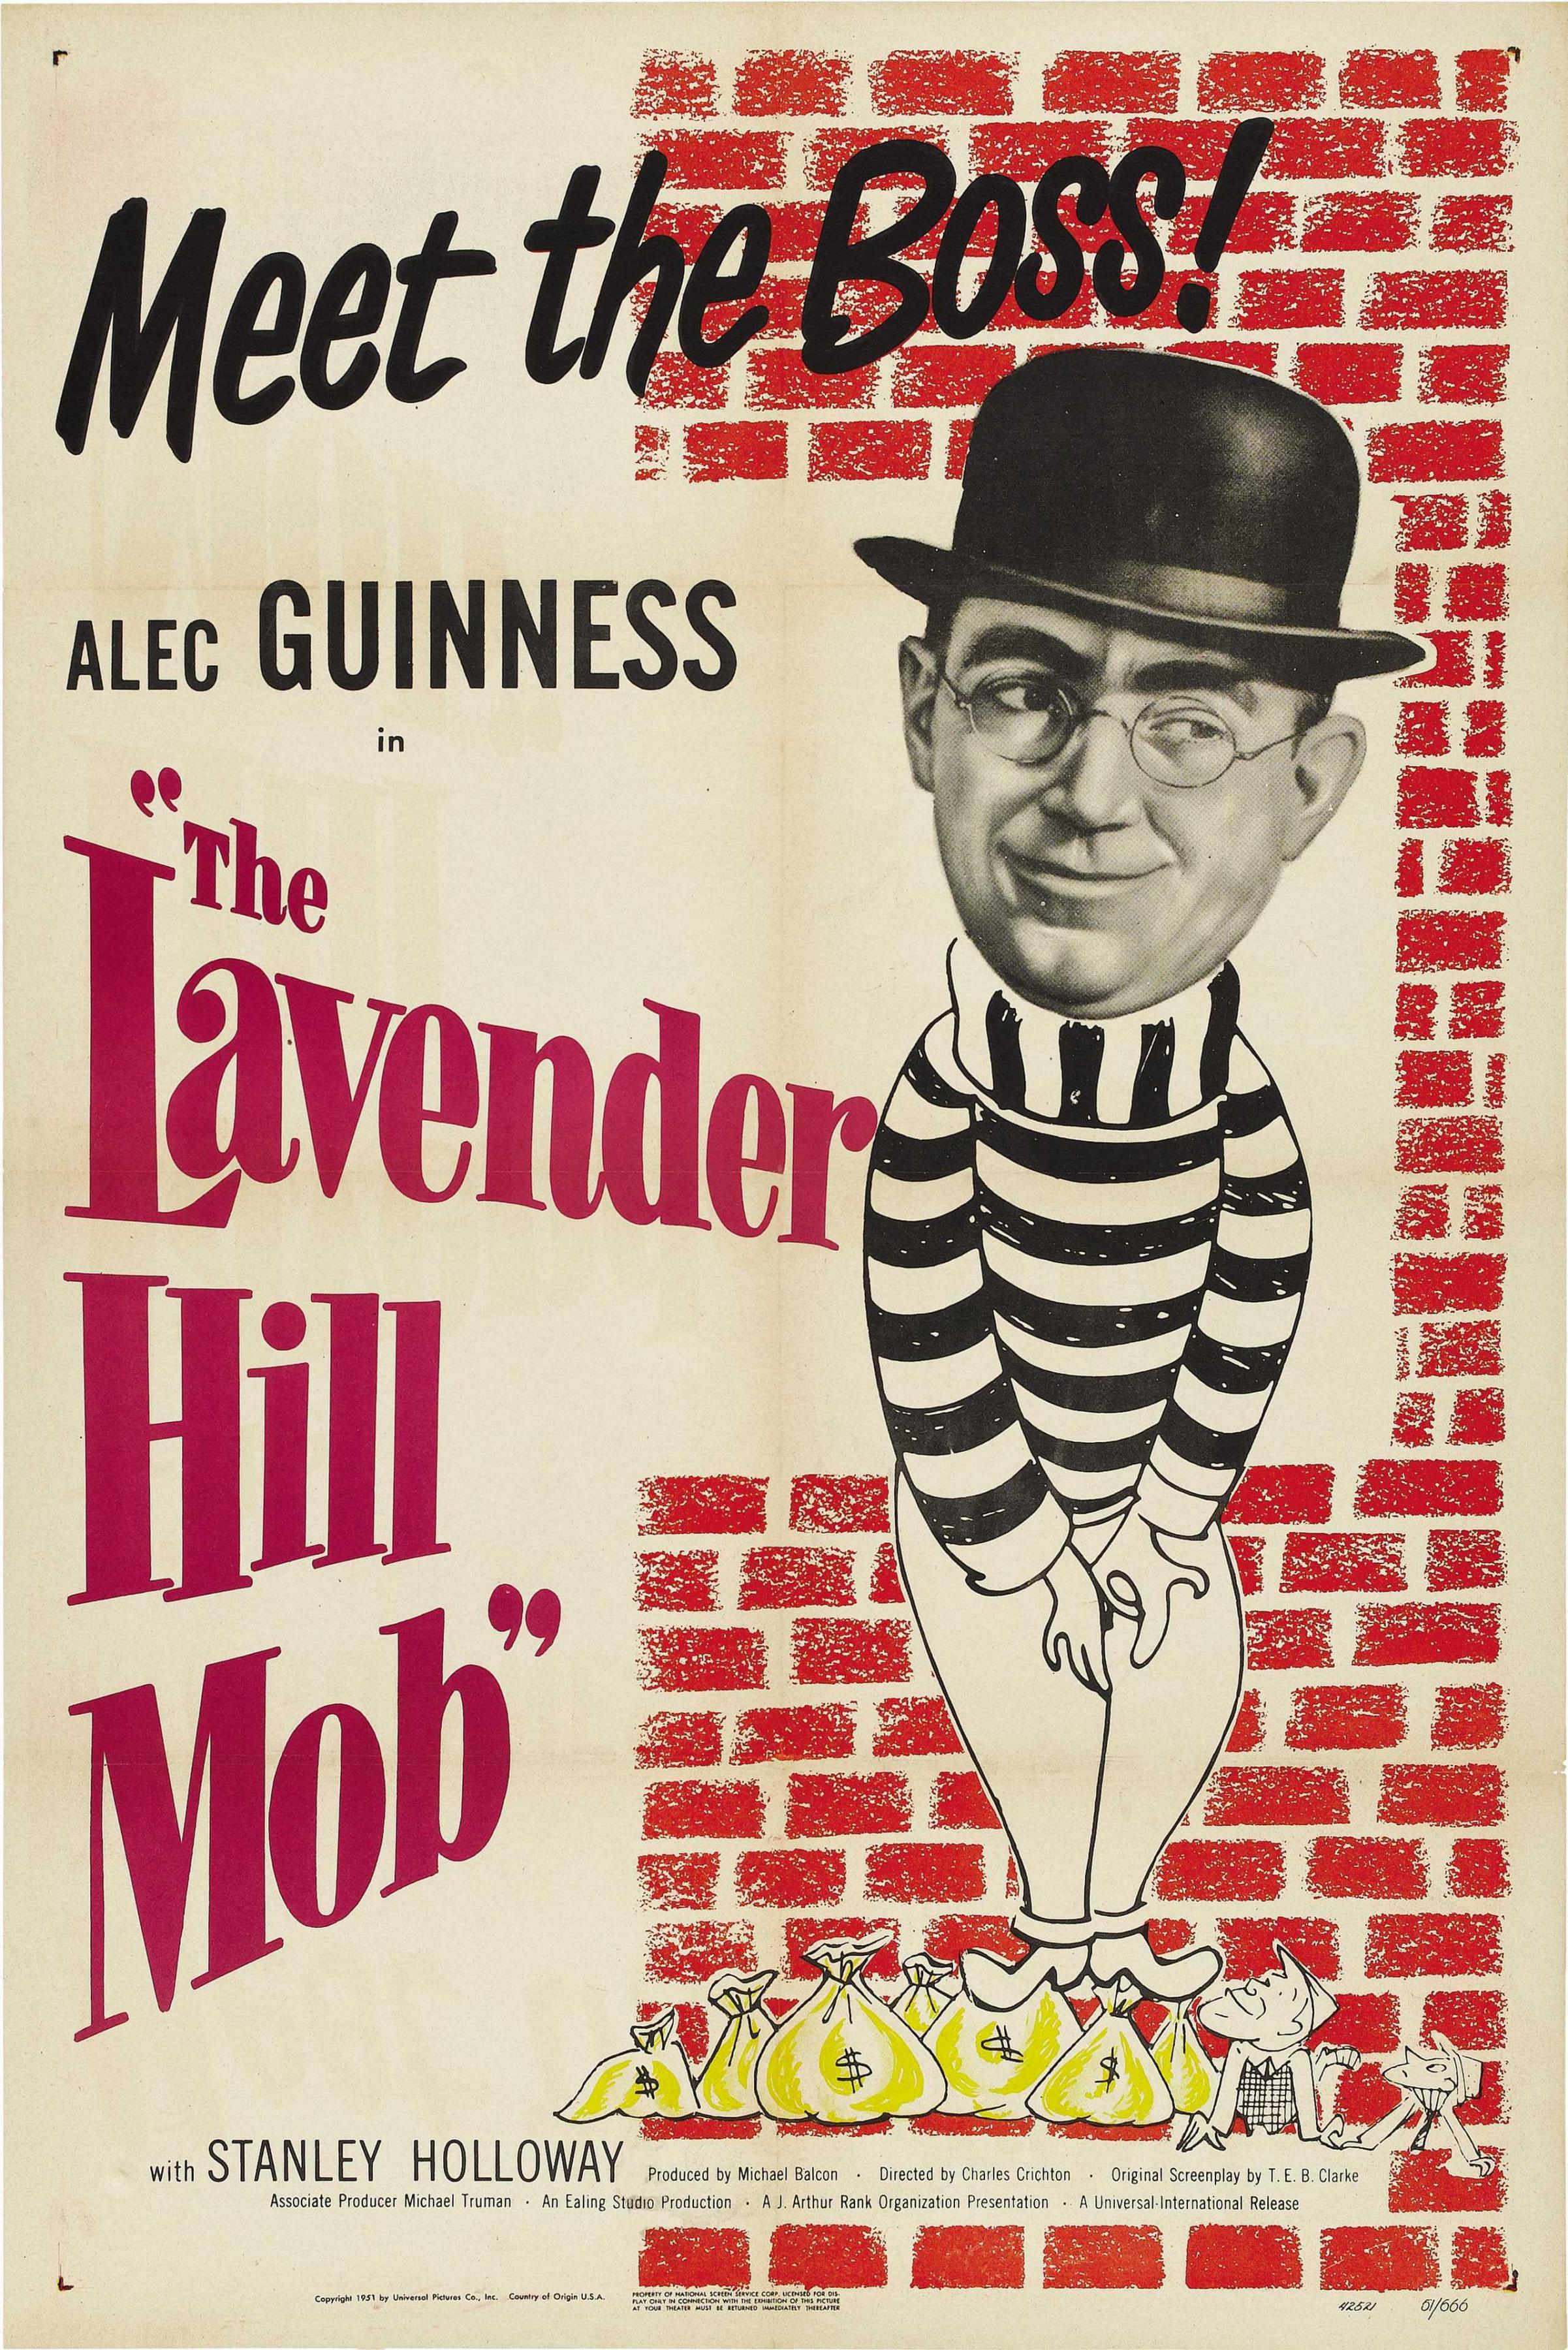 Постер фильма Банда с Лавендер Хилл | Lavender Hill Mob